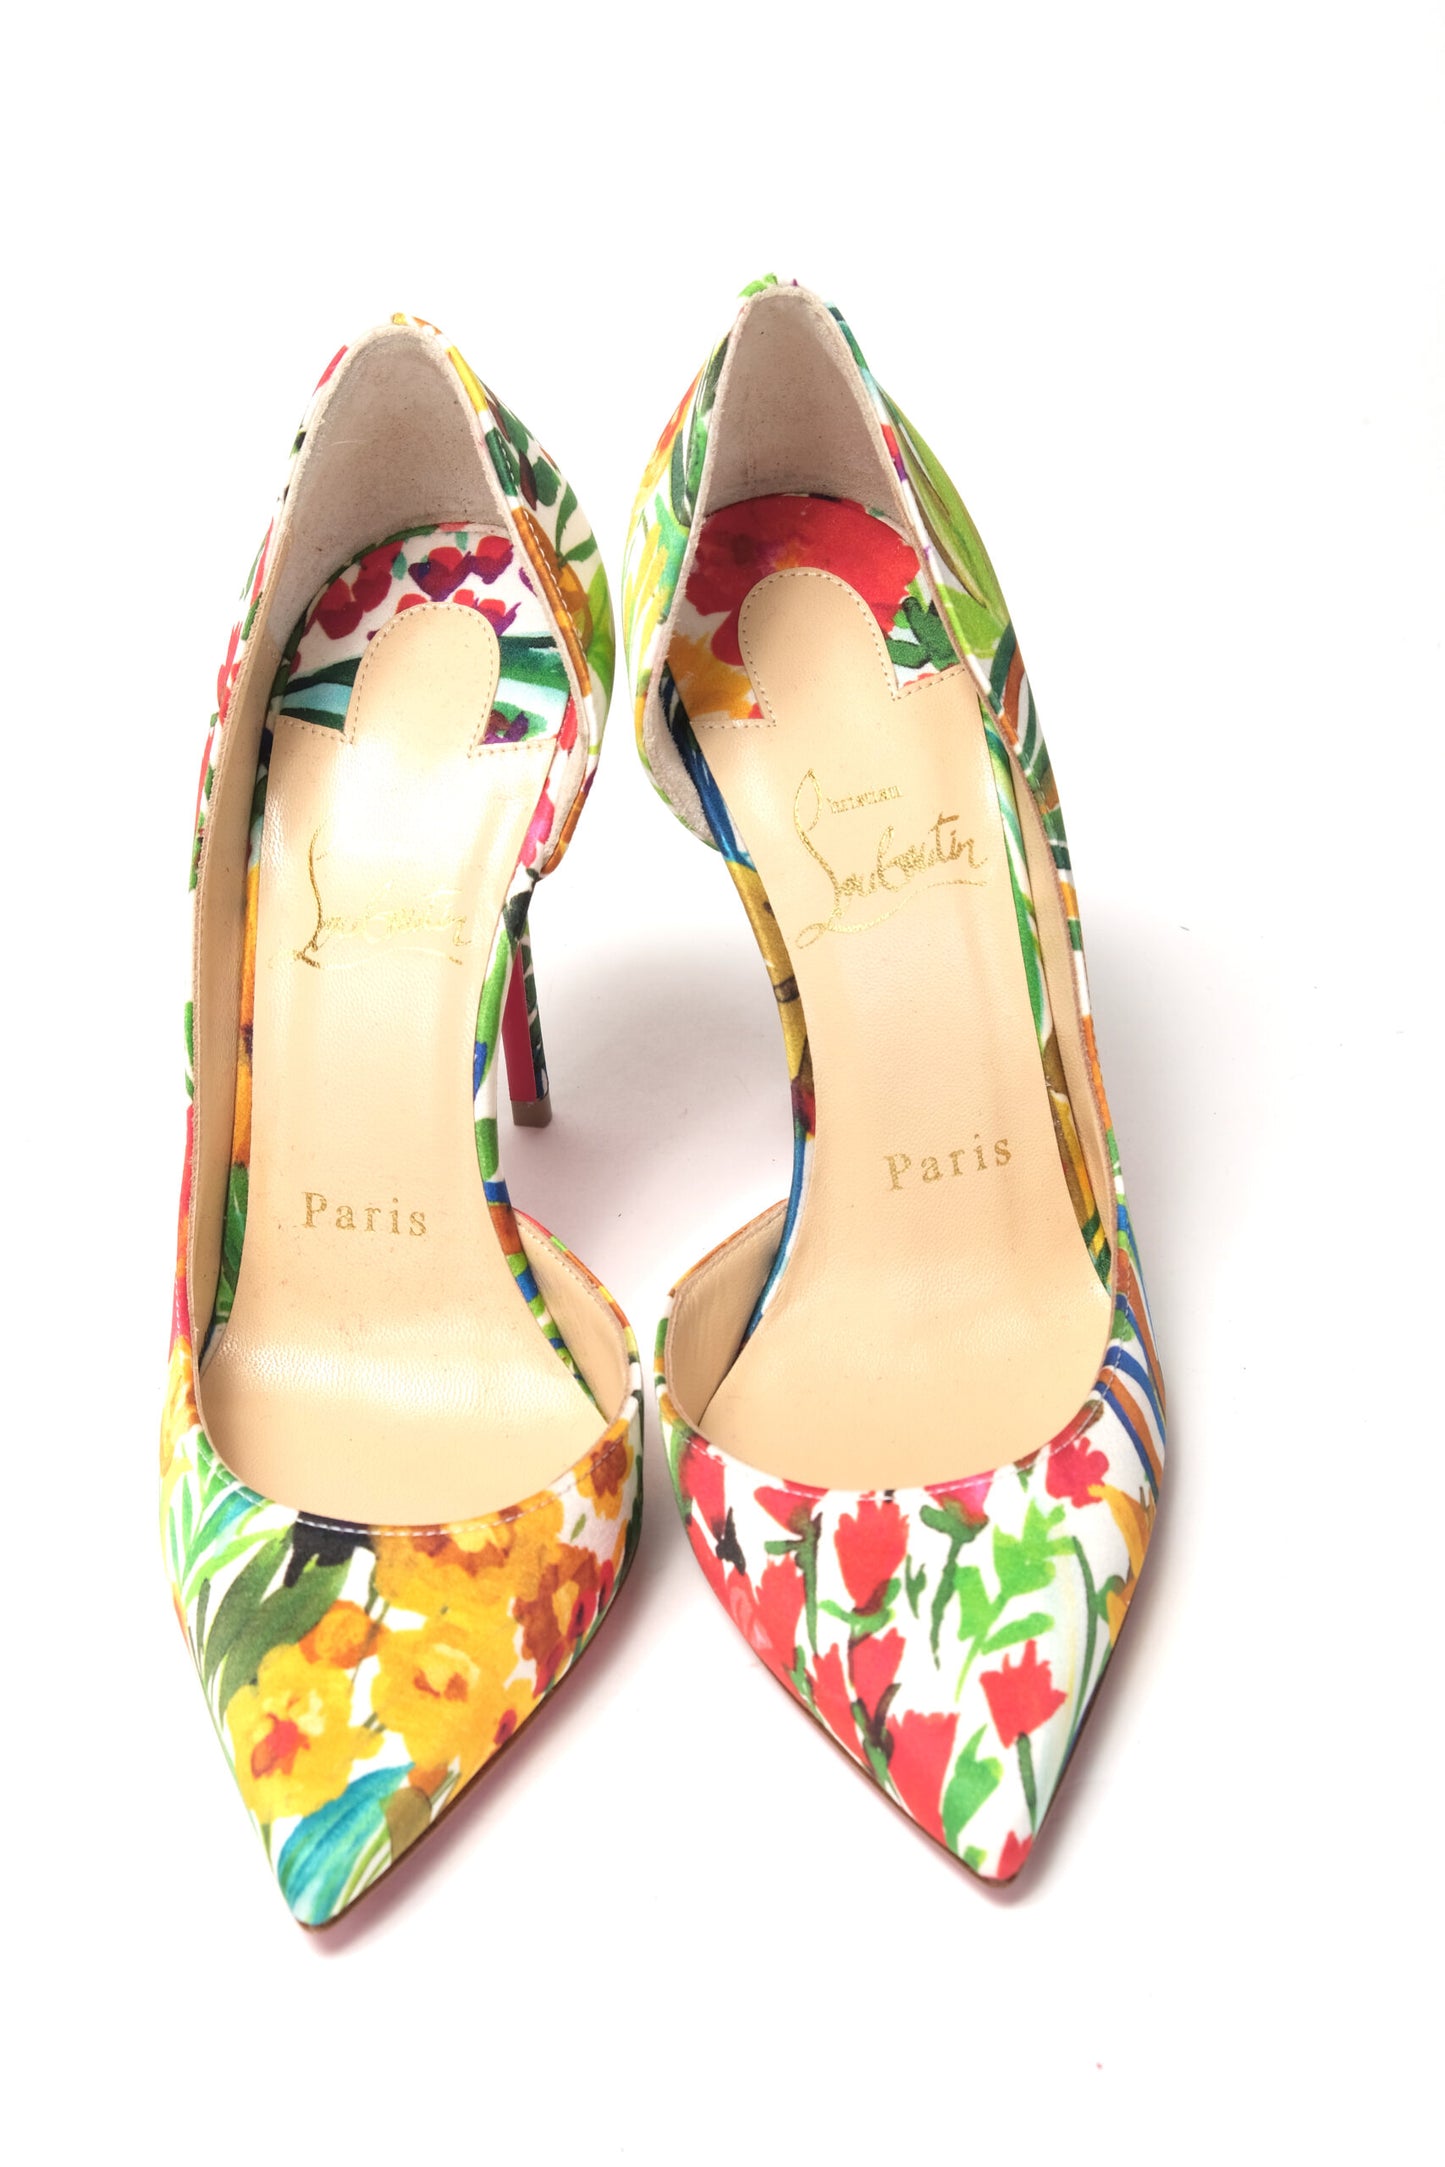 Multicolor Flower Printed High Heels Pumps Shoes